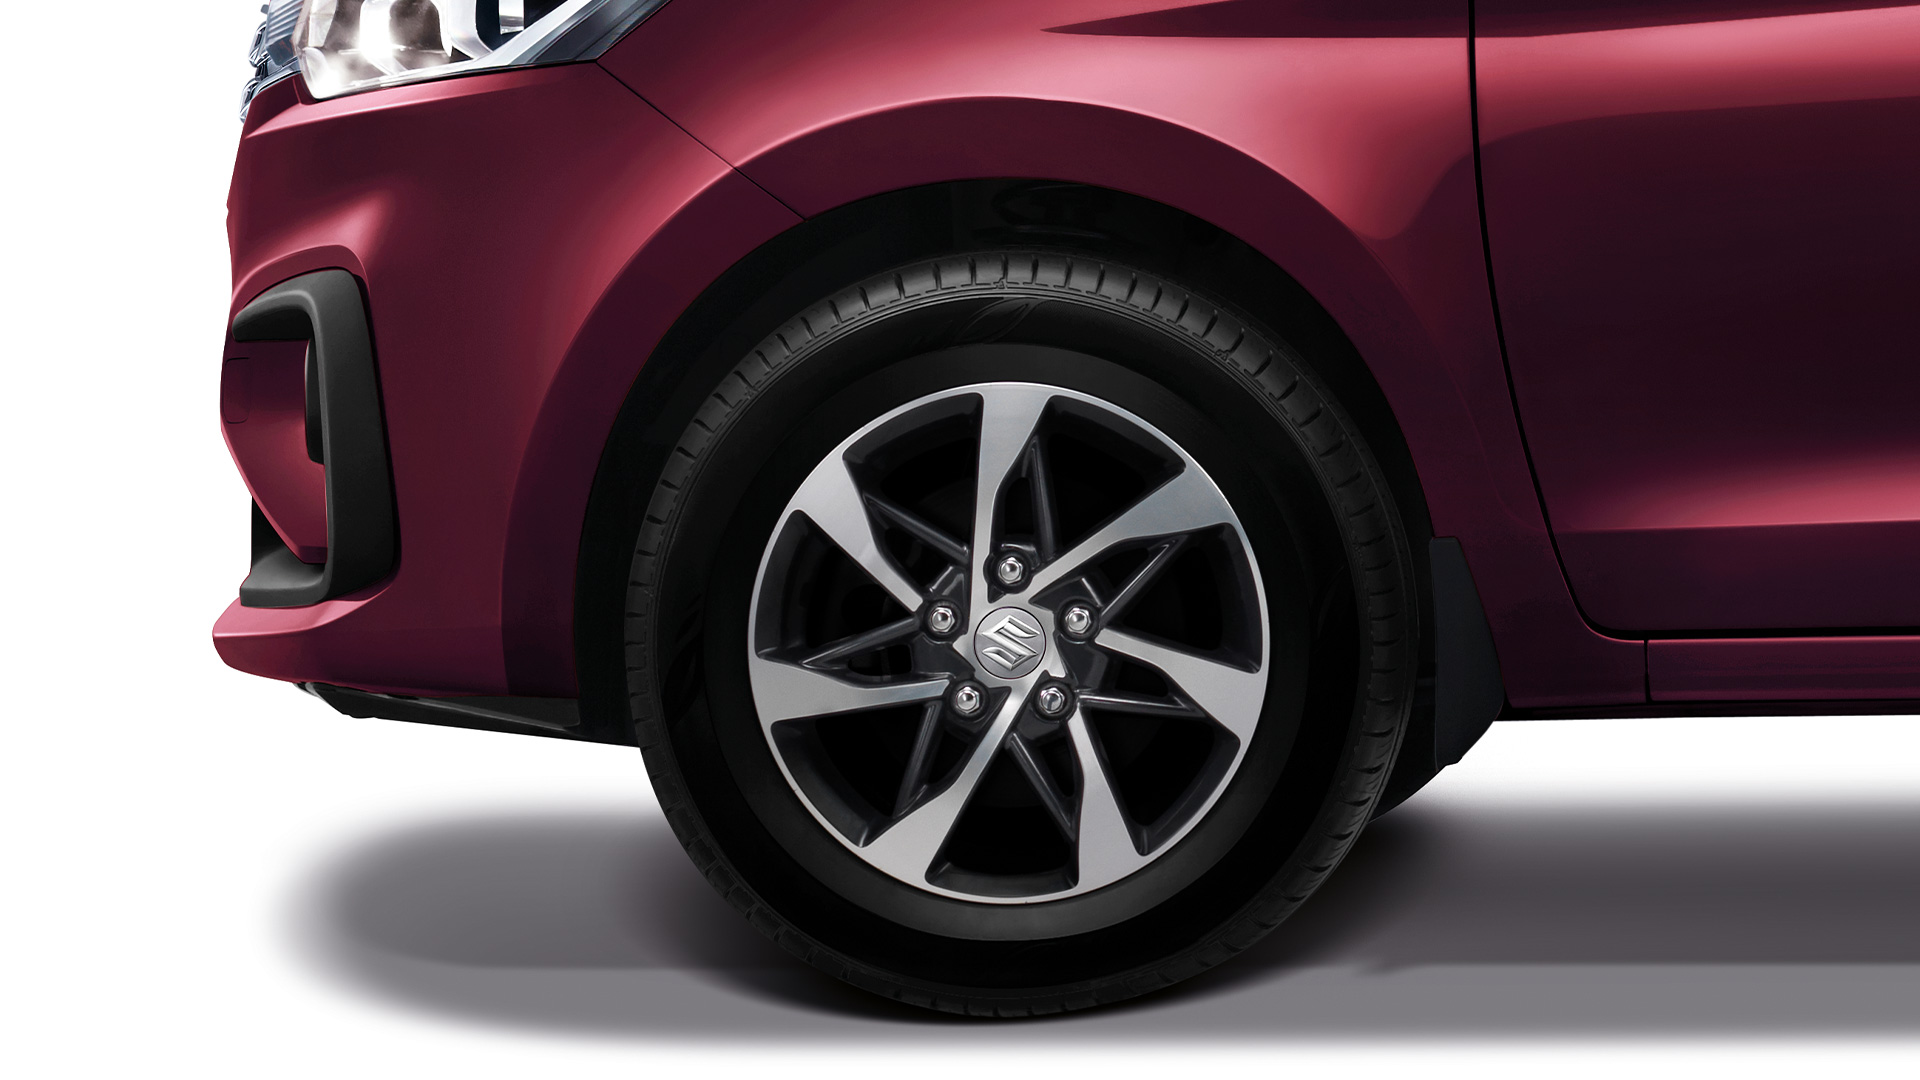 Suzuki ERTIGA Sporty two-tone 15-inch alloy wheels.